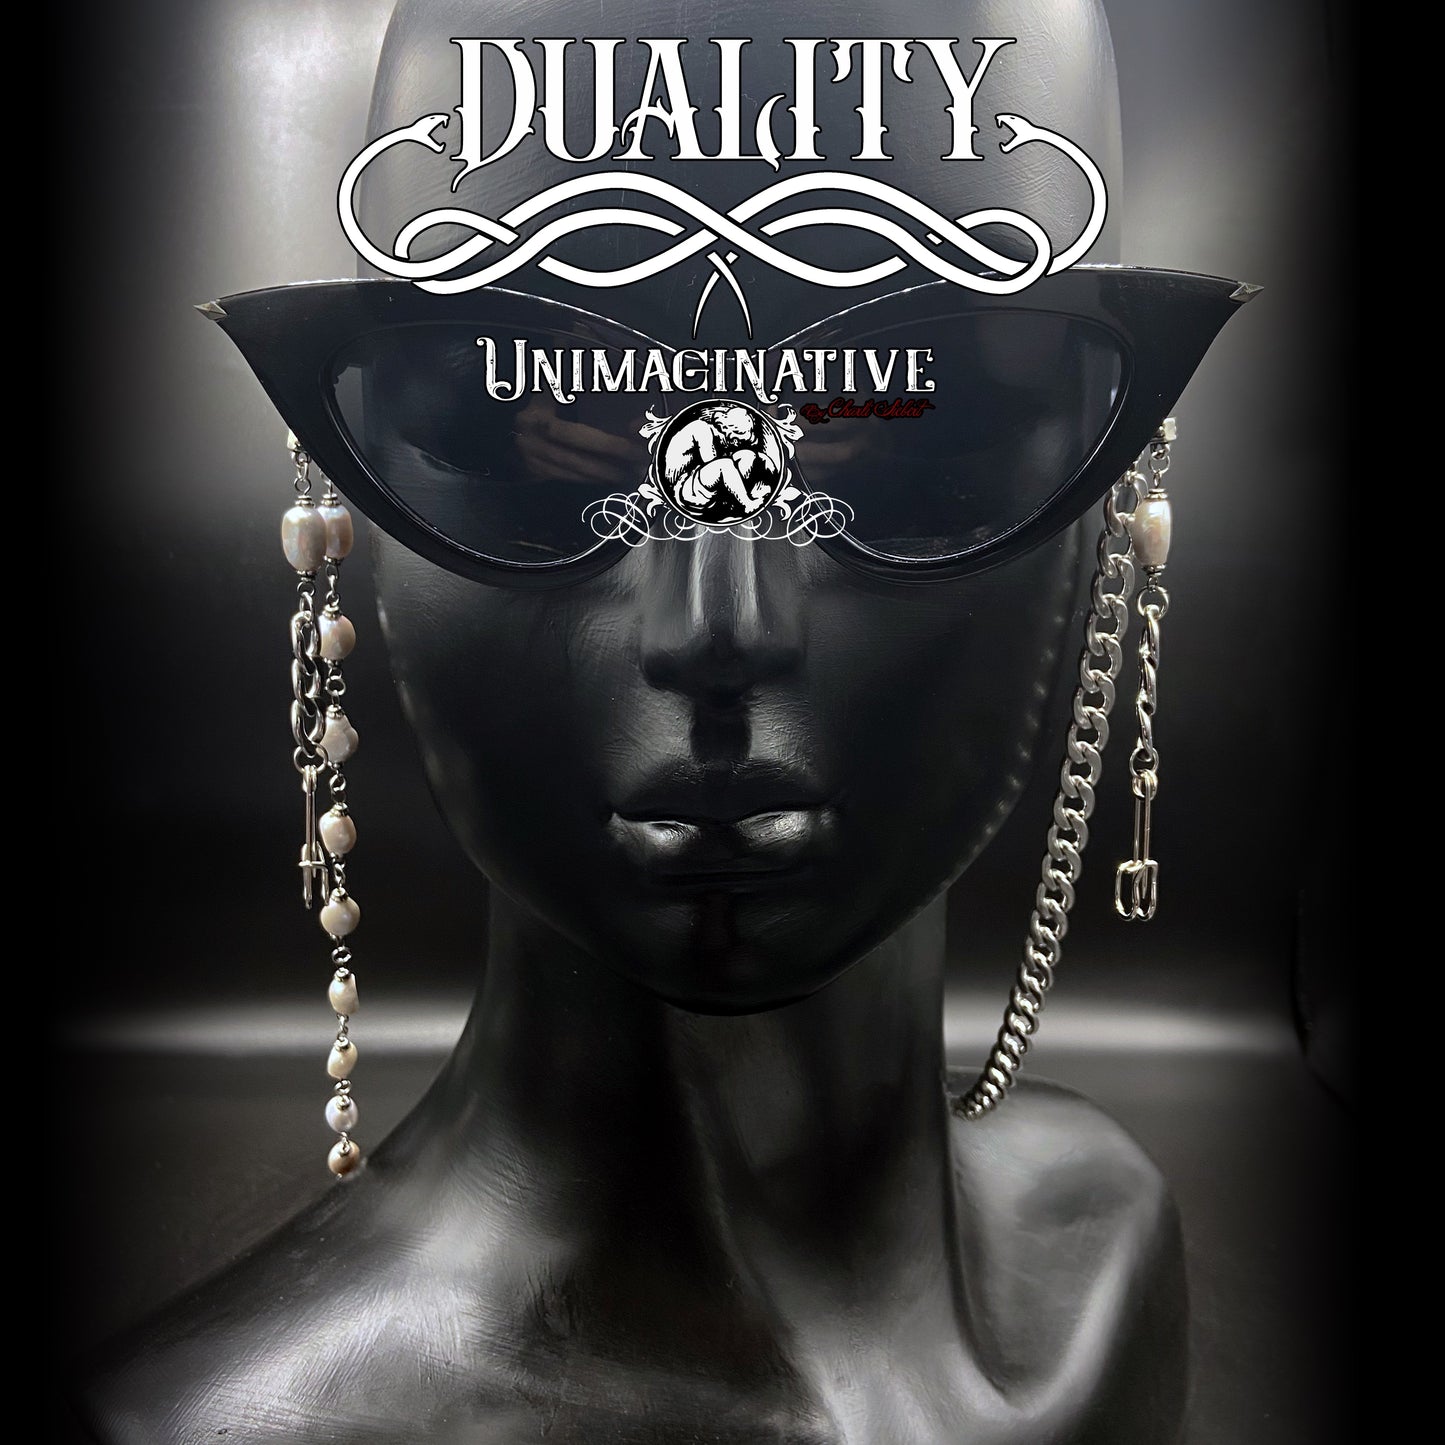 Duality eyewear chain